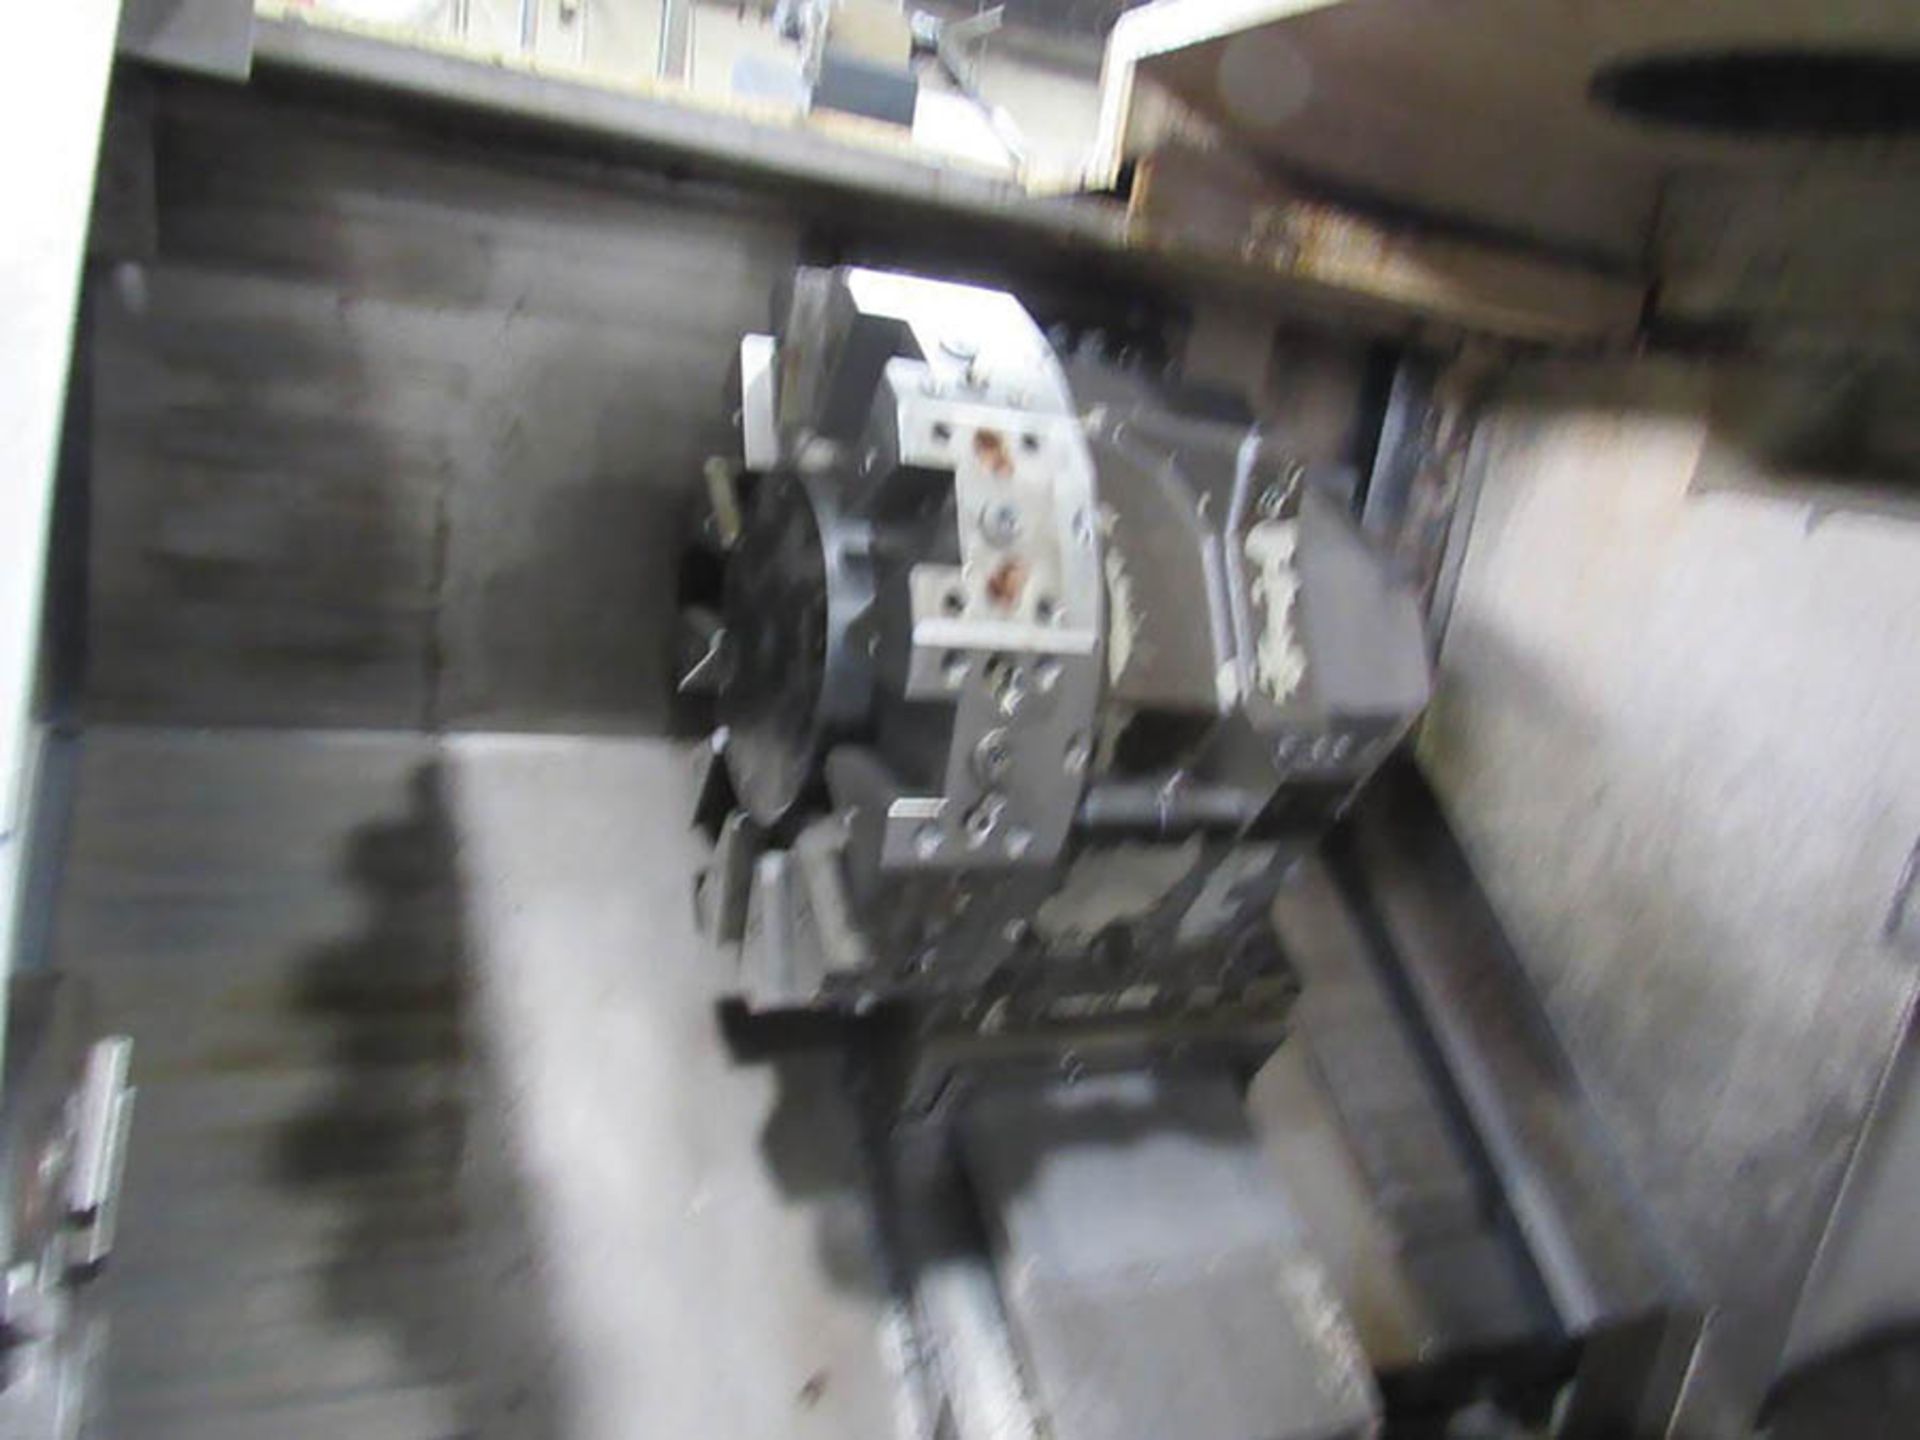 OKUMA CADET CNC TURNING CENTER MODEL LNC8, S/N D219, 10'' 3-JAW CHUCK, 12-POSITION TURRET, - Image 3 of 8